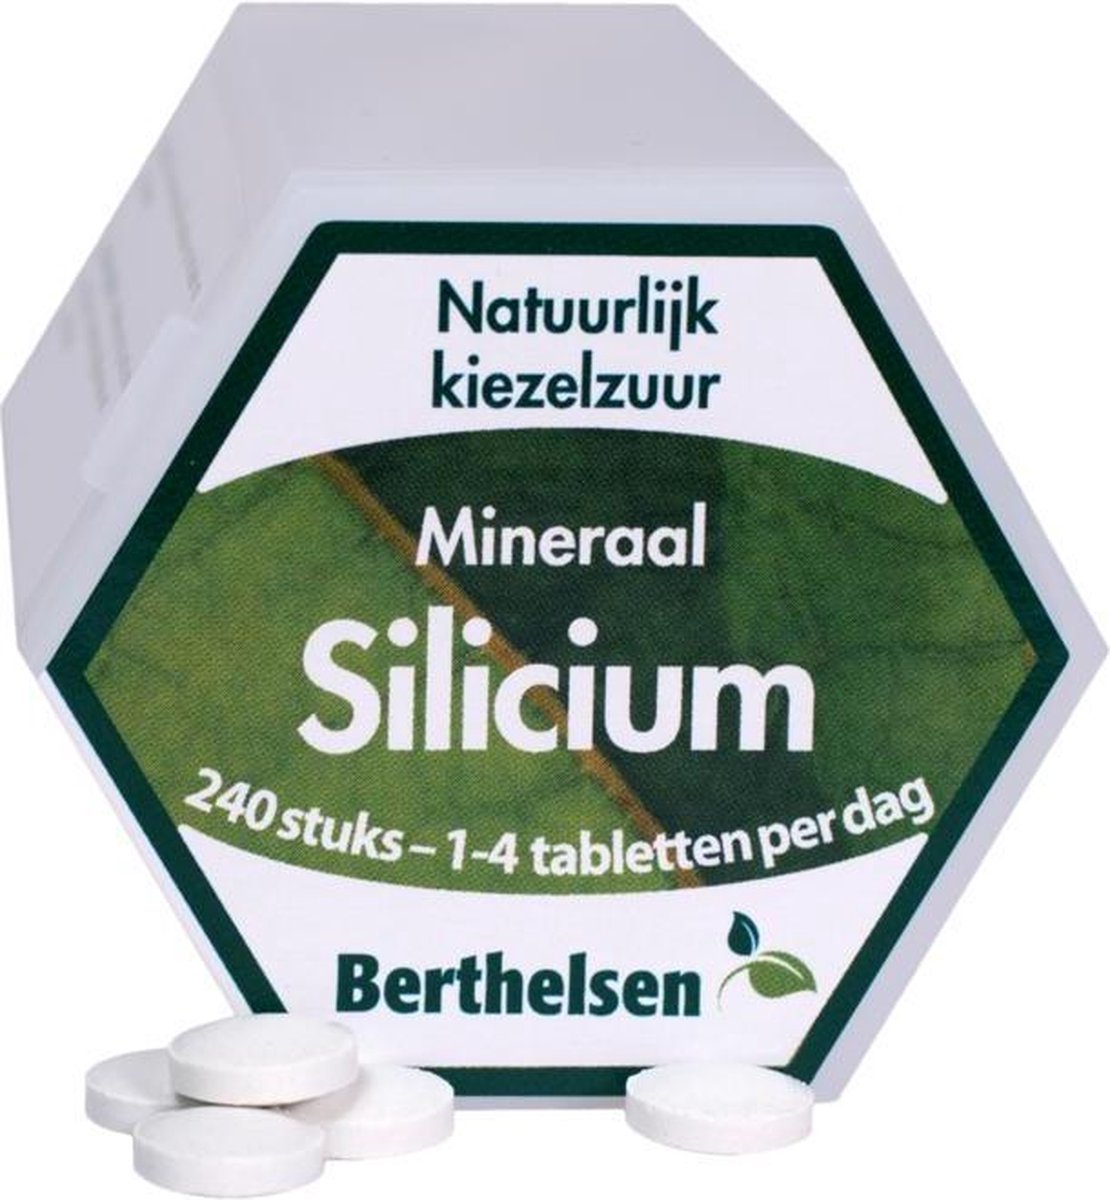 Berthelsen Silicium 240 tabletten